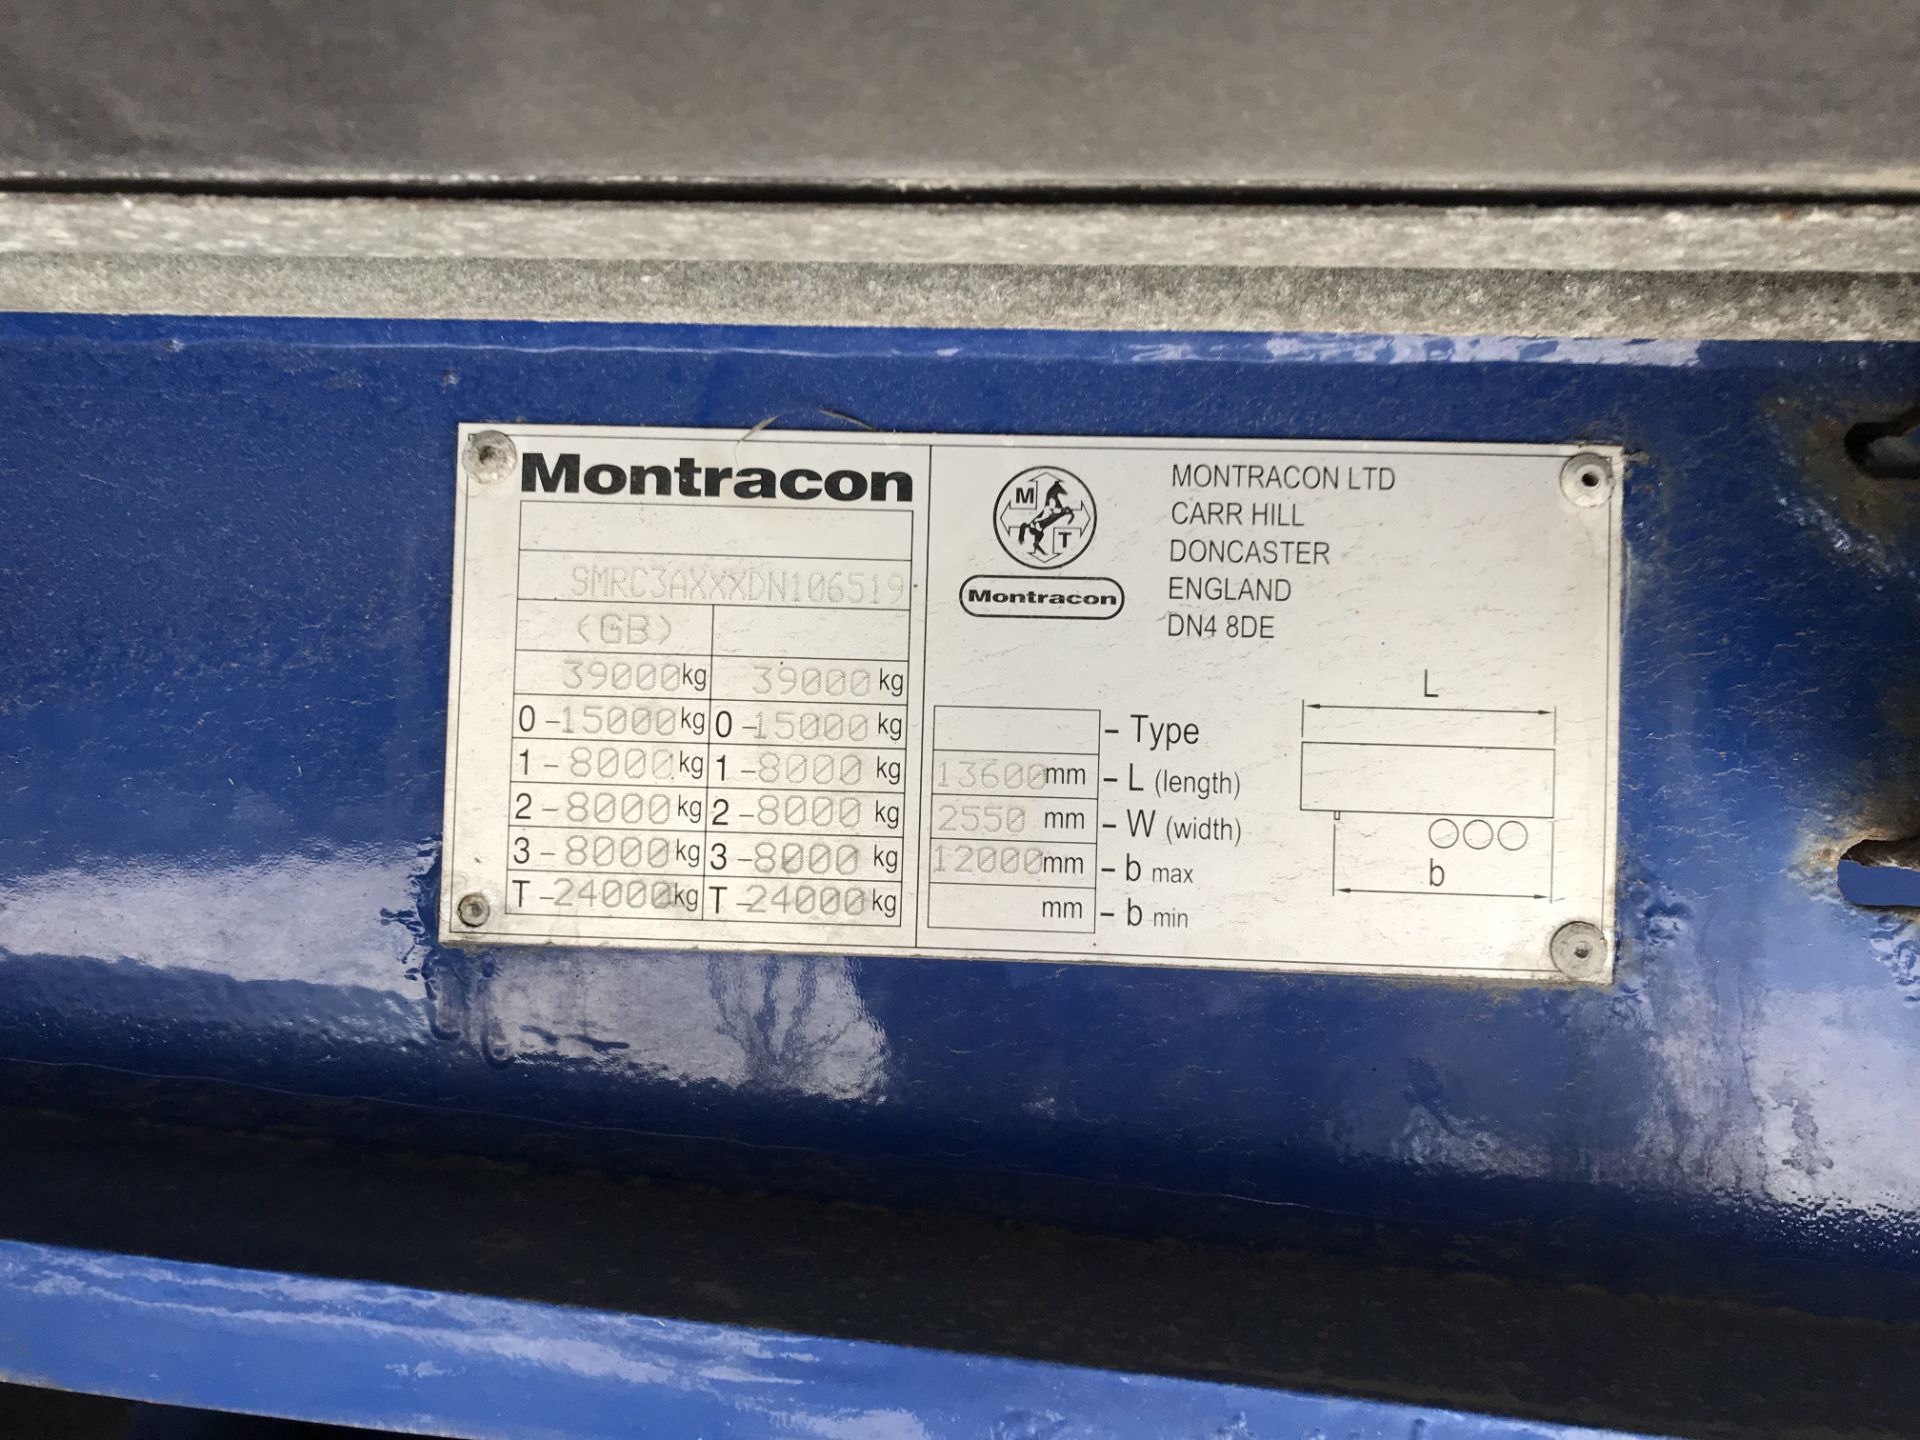 Montracon 13.6m Tri-Axle Curtainside Single Deck Semi-Trailer, chassis no. SMRC3AXXXDN106519, ID no. - Image 6 of 6